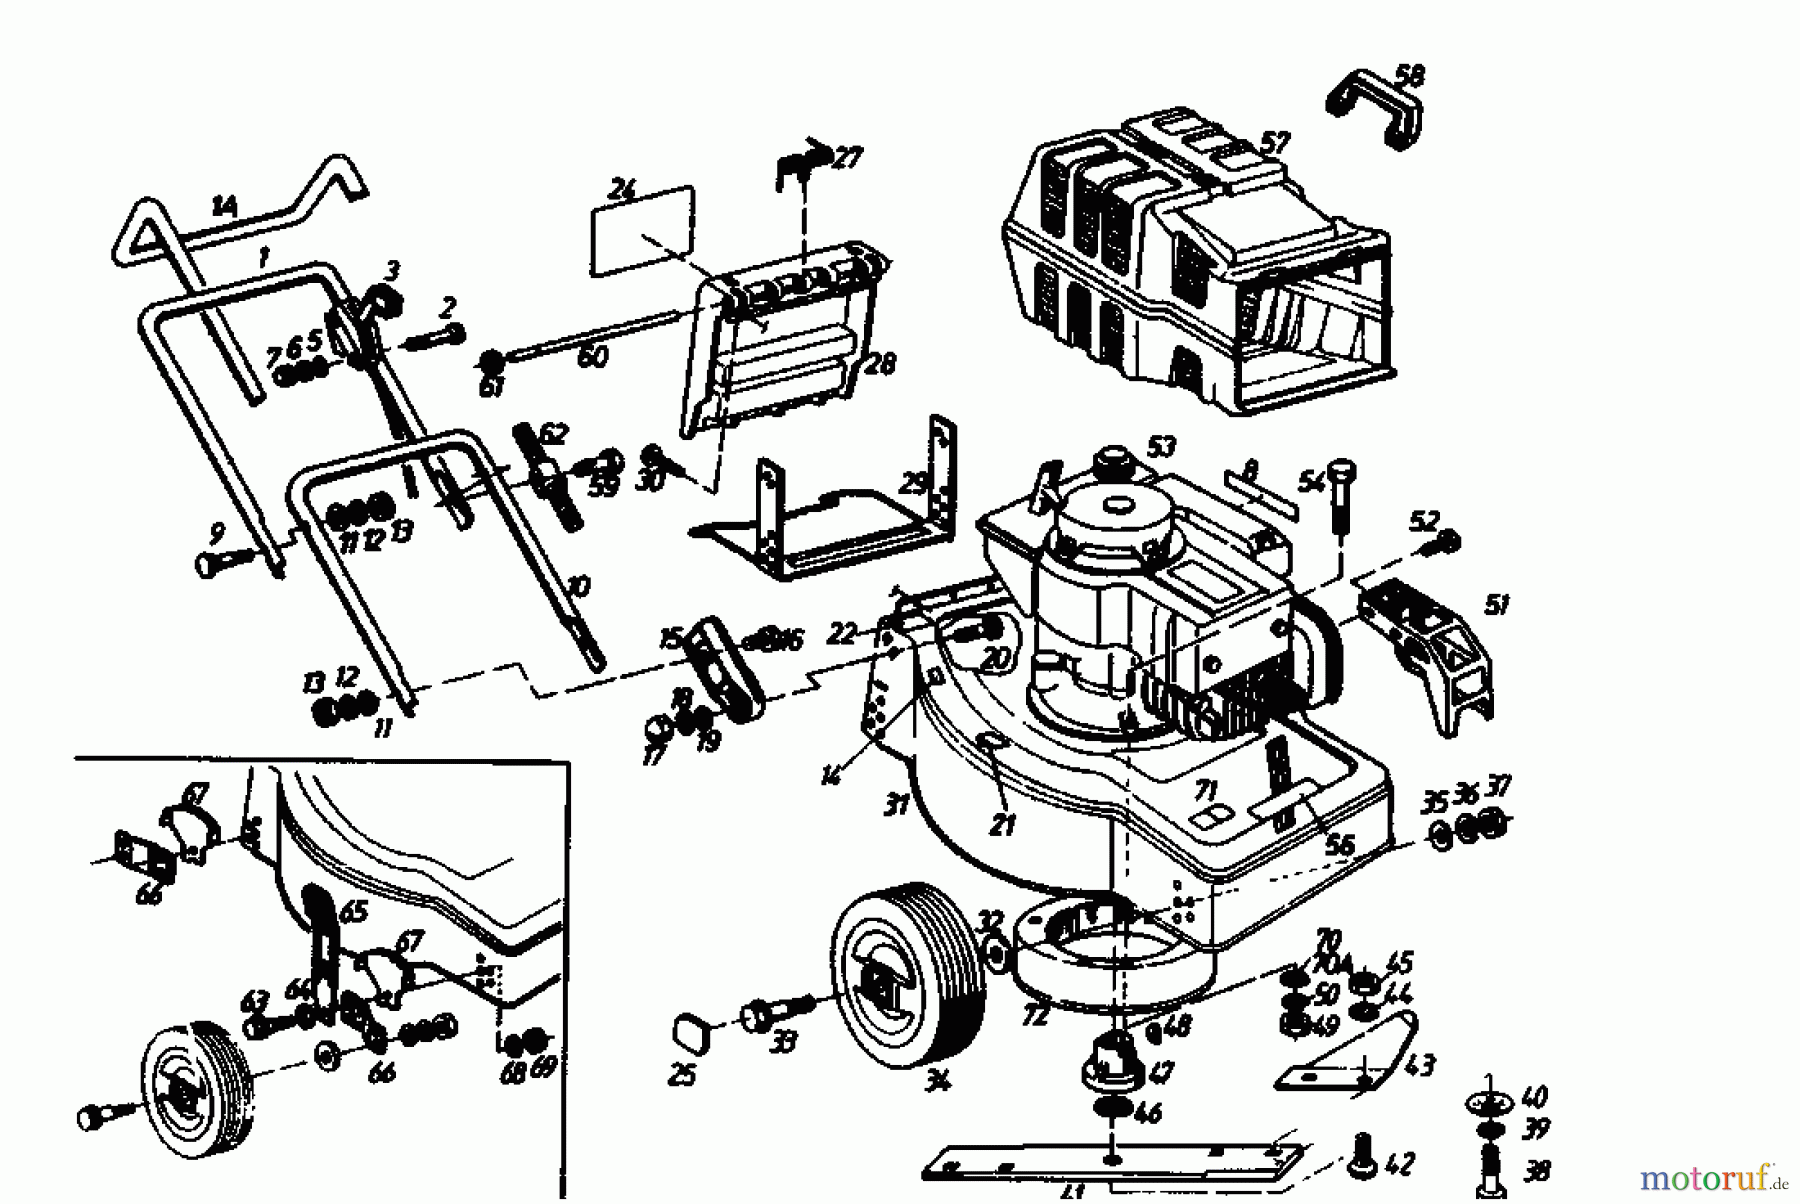  Golf Petrol mower Golf HB 02880.03  (1989) Basic machine